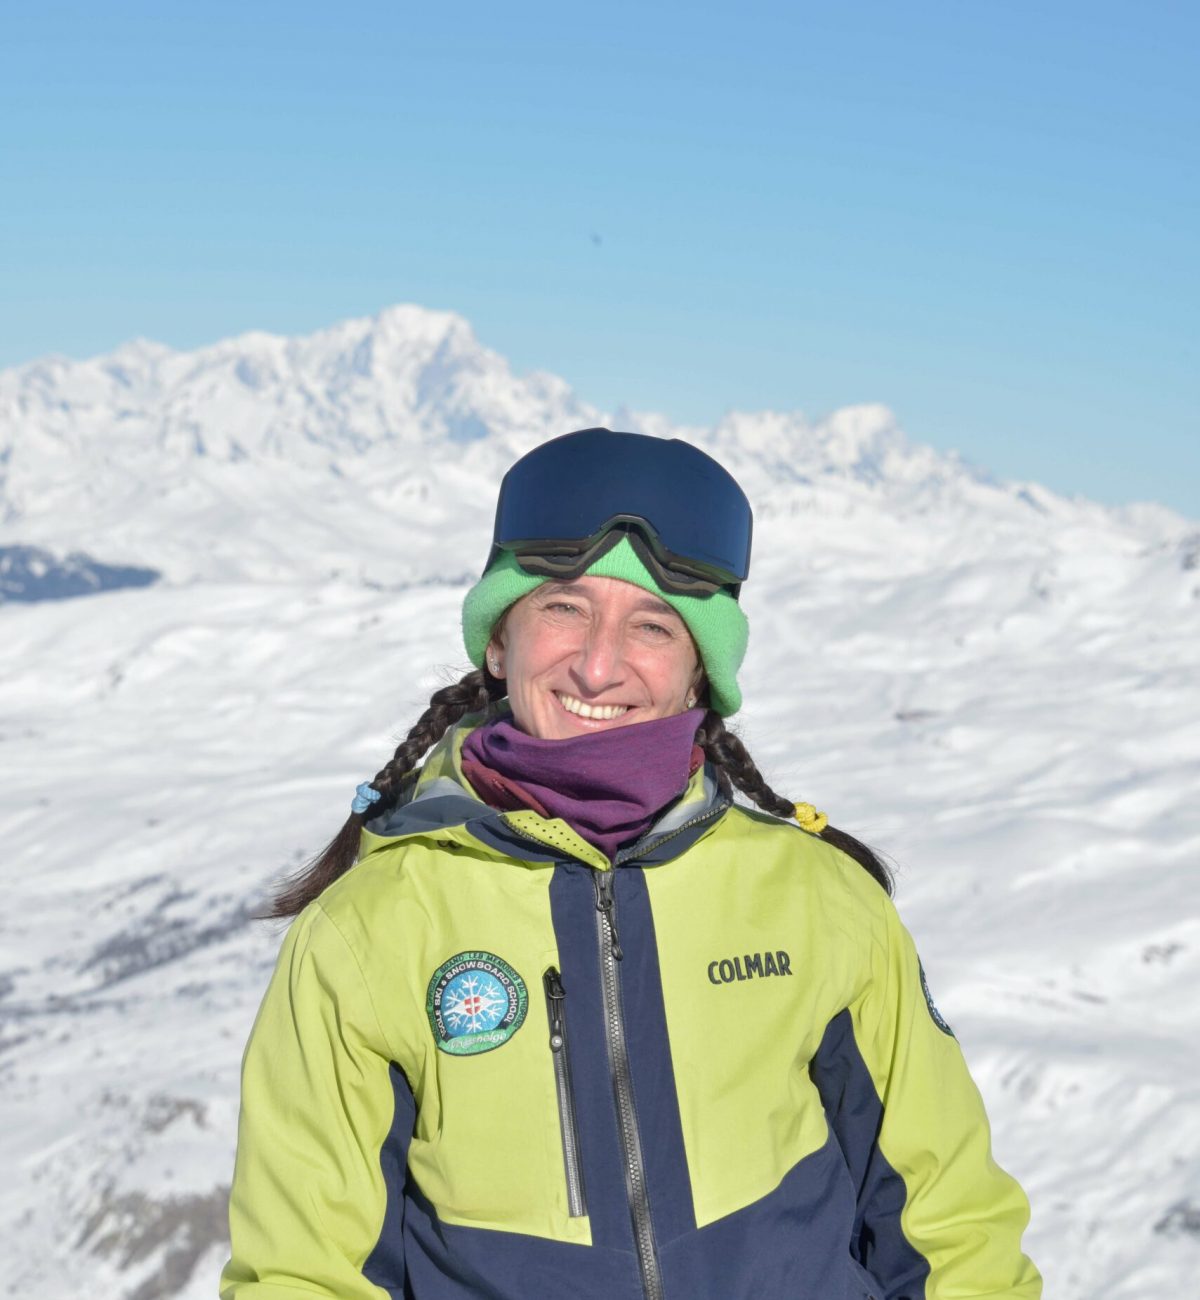 Barbara-moniteur-ski-prosneige